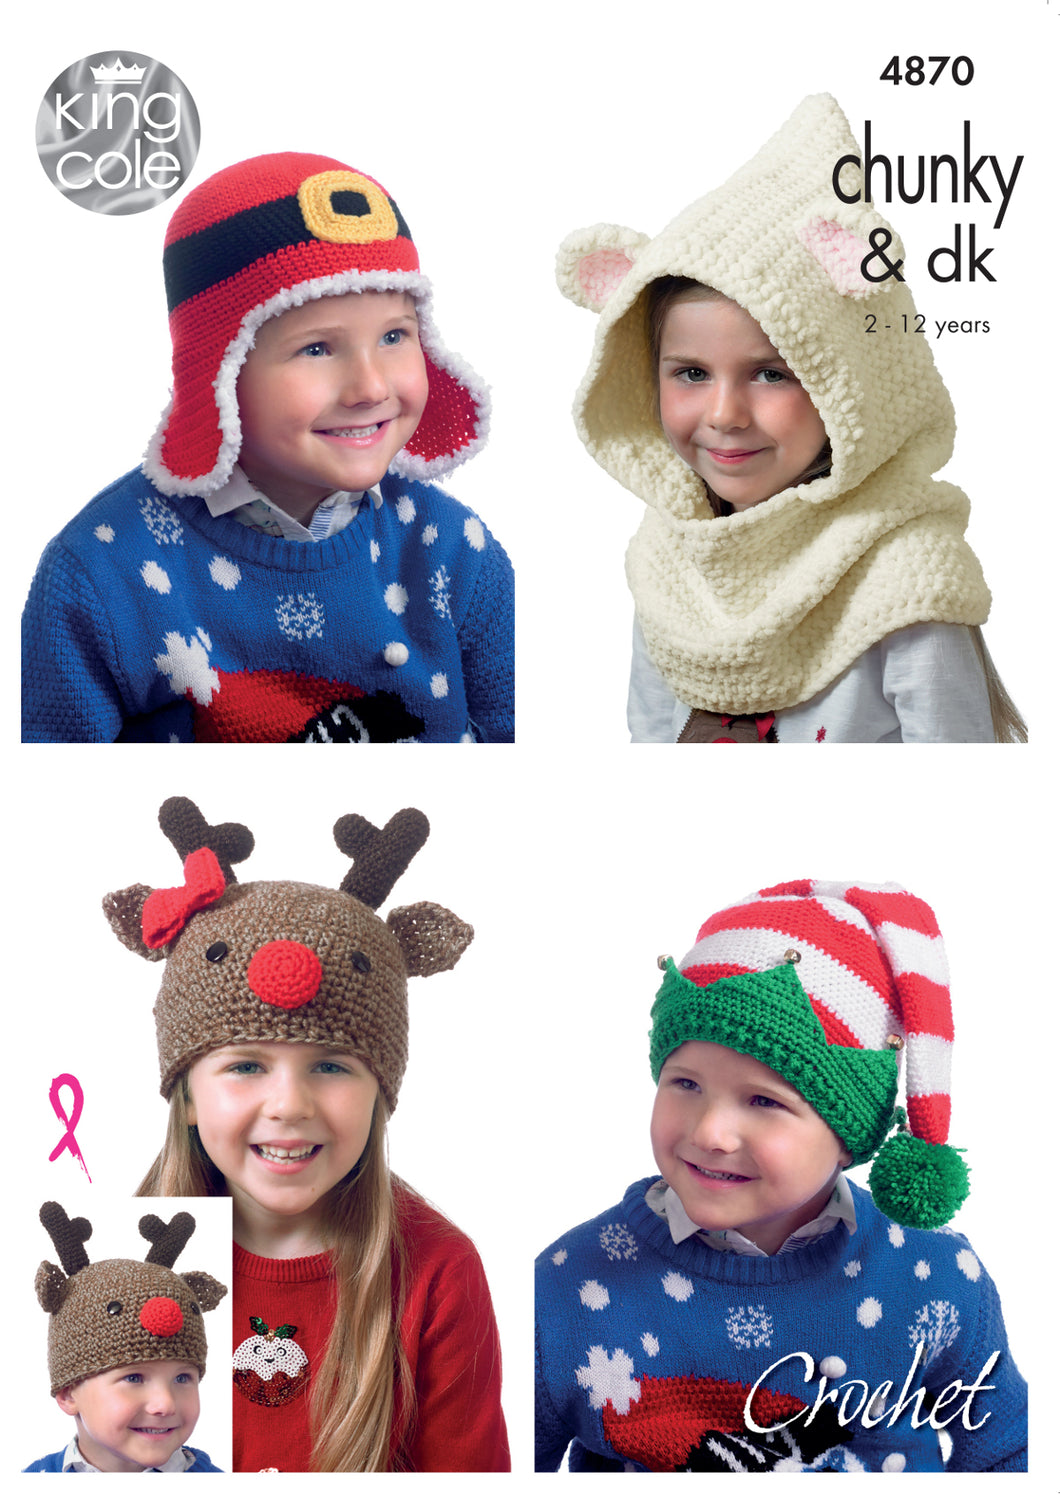 King Cole Chunky & DK Crochet Pattern - Childrens Novelty Hats (4870)